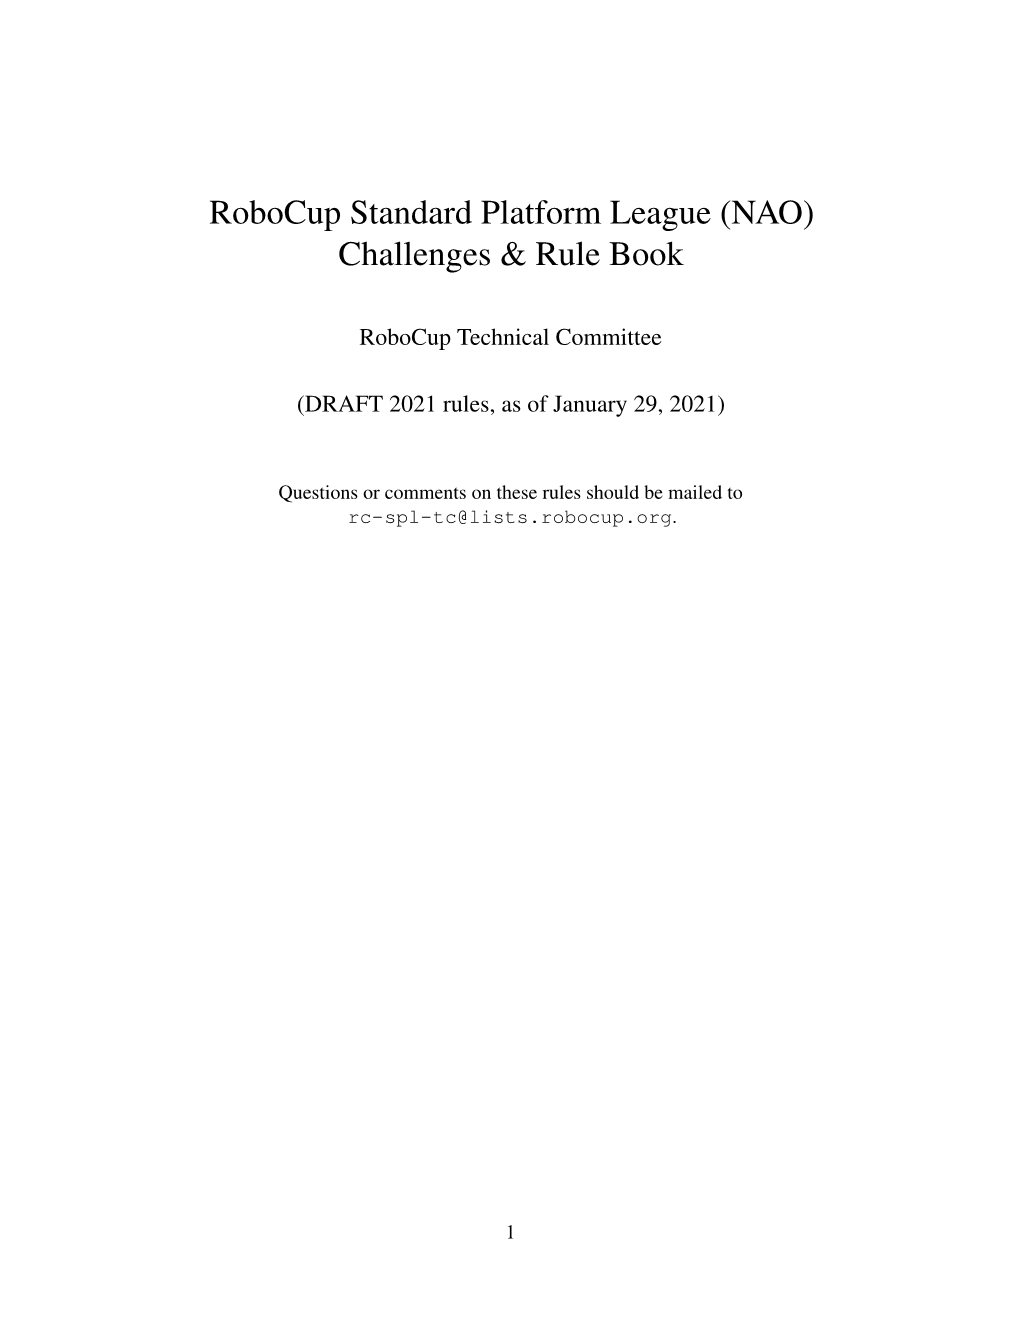 Robocup Standard Platform League (NAO) Challenges & Rule Book